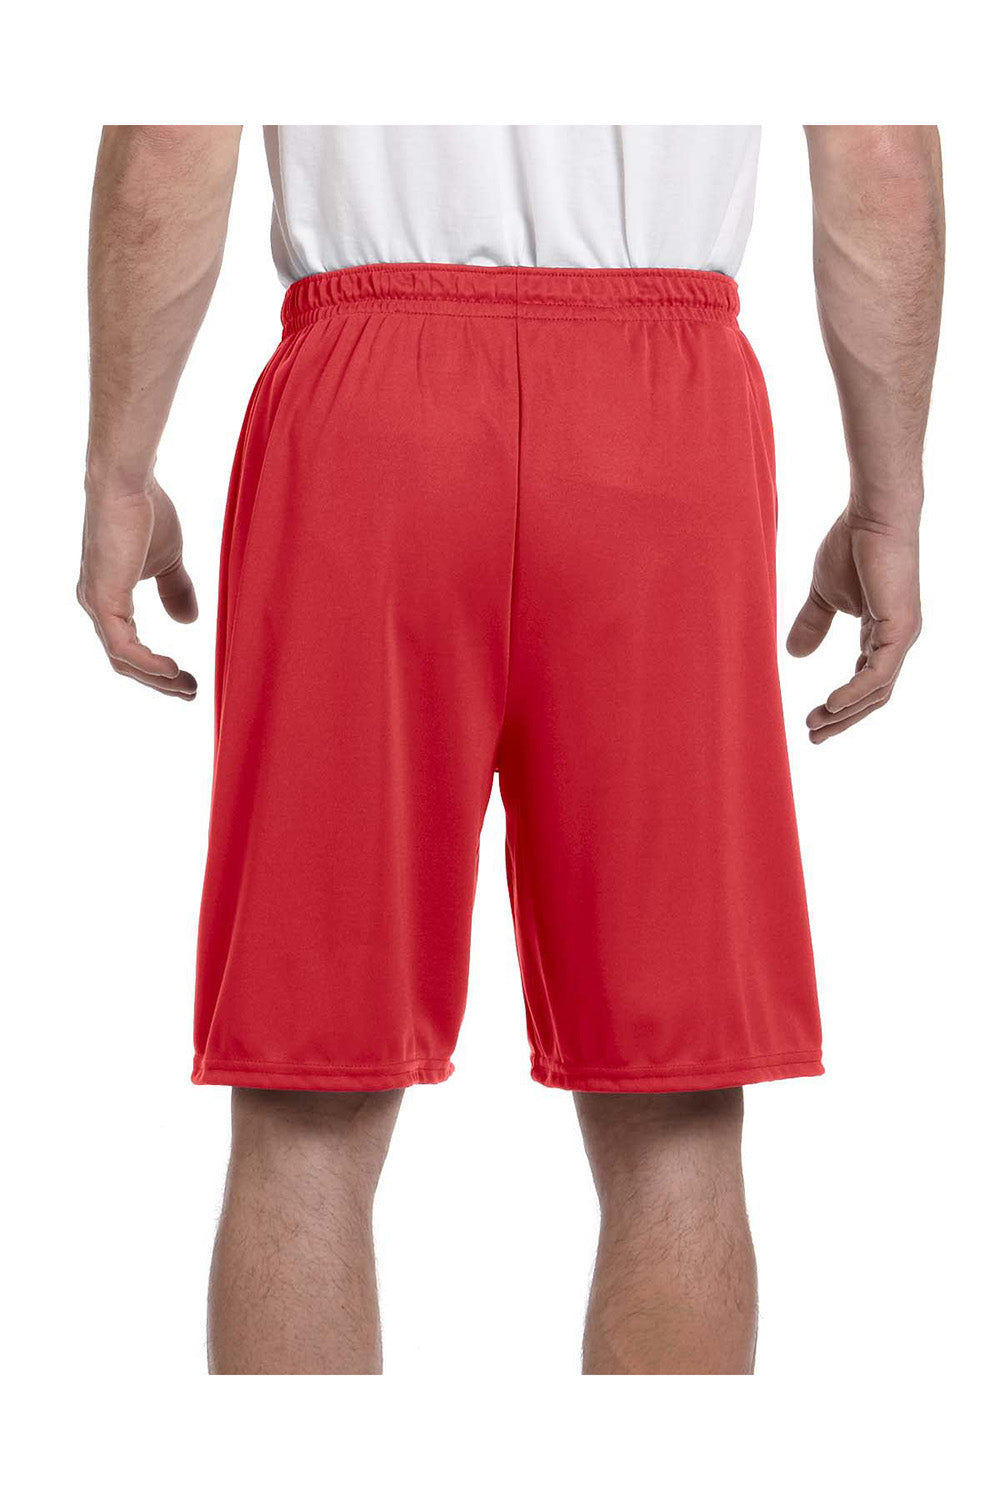 Augusta Sportswear 1420 Mens Training Shorts Red Model Back